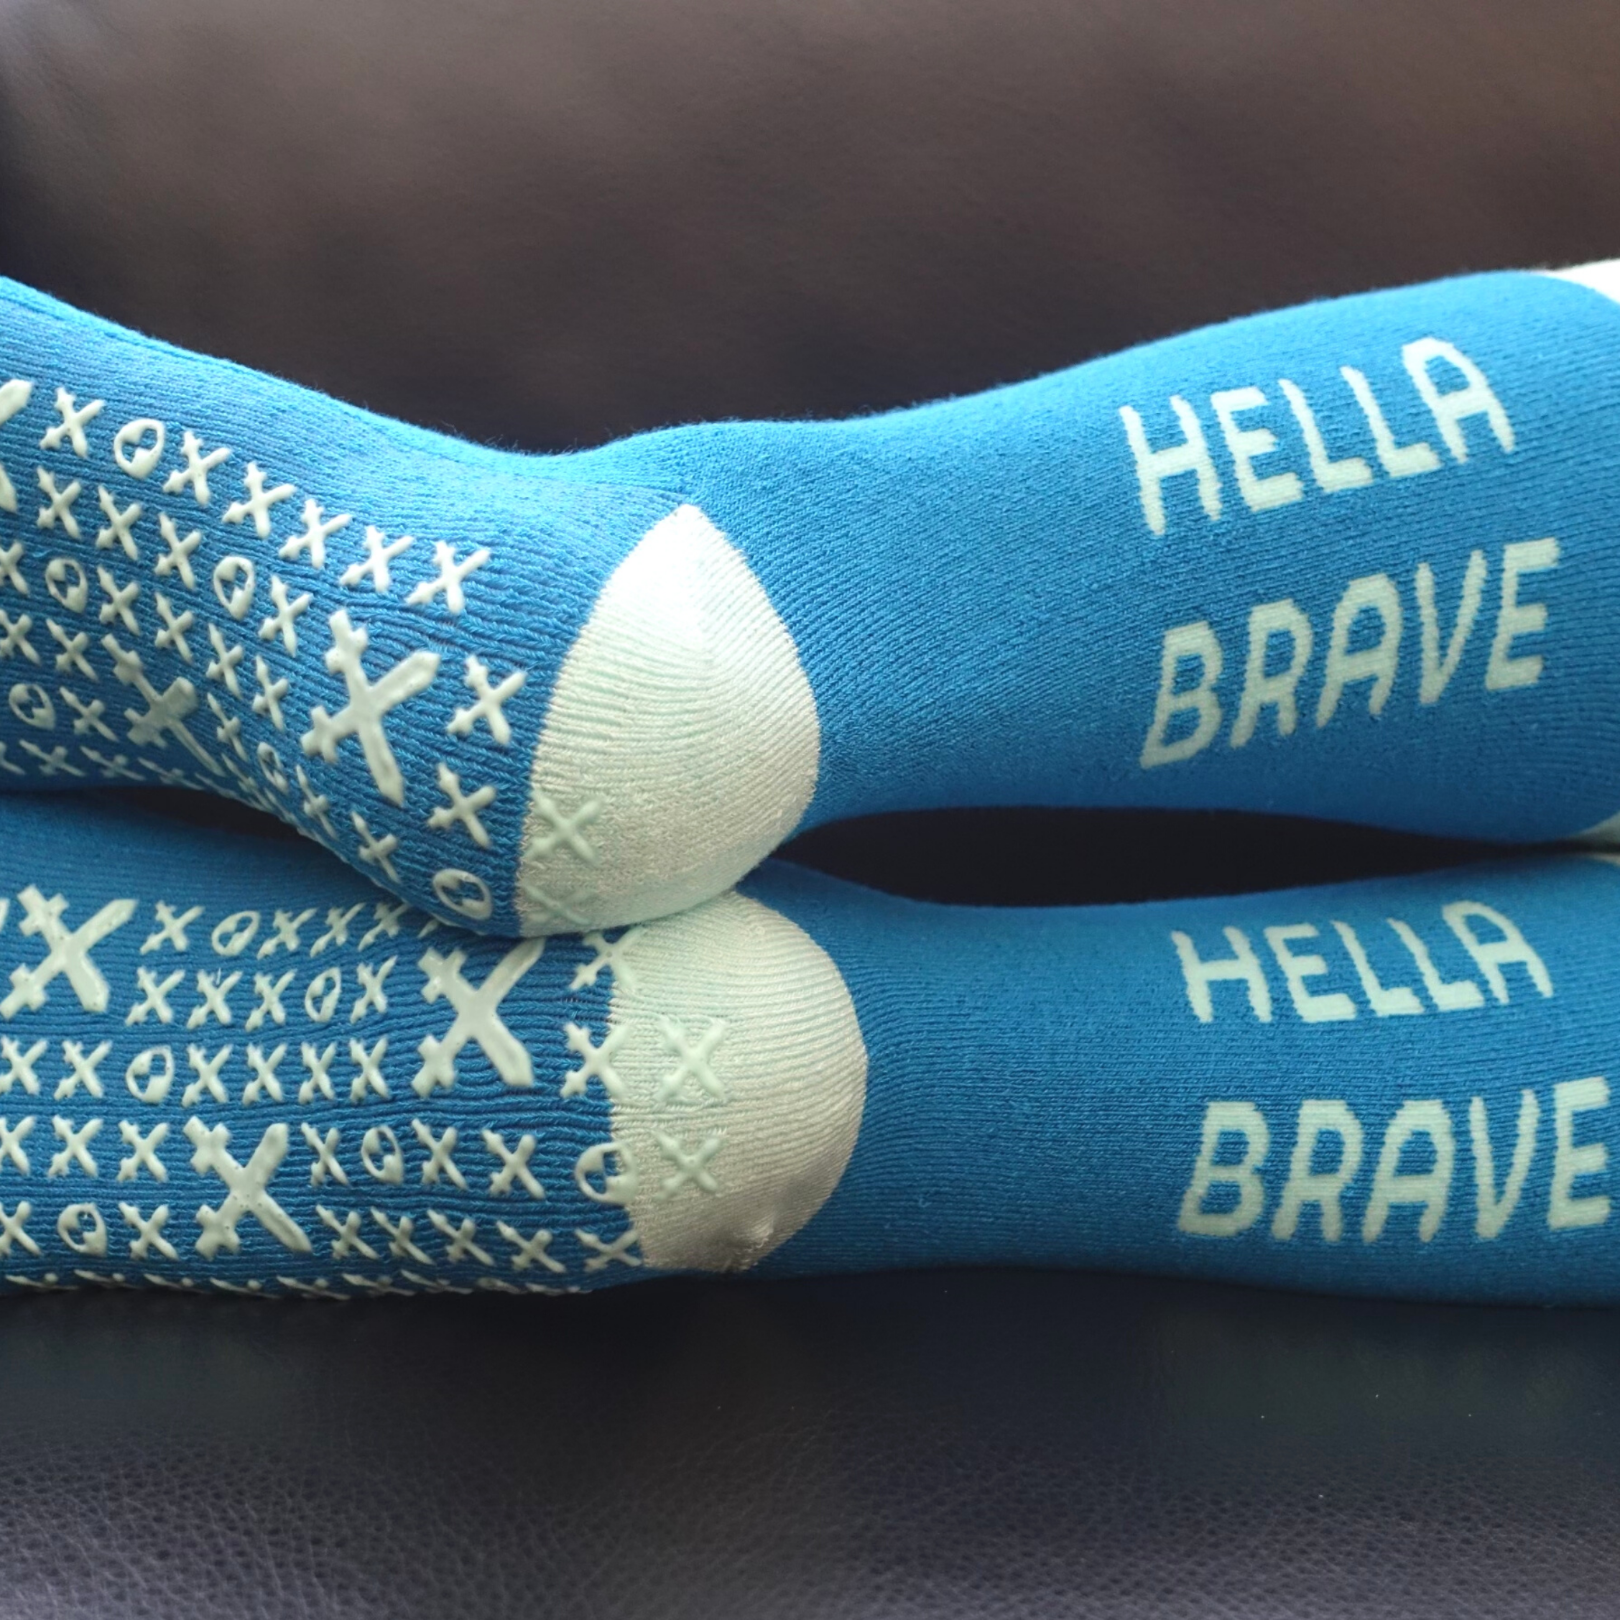 HELLA BRAVE Grip Sock Gift Non Skid